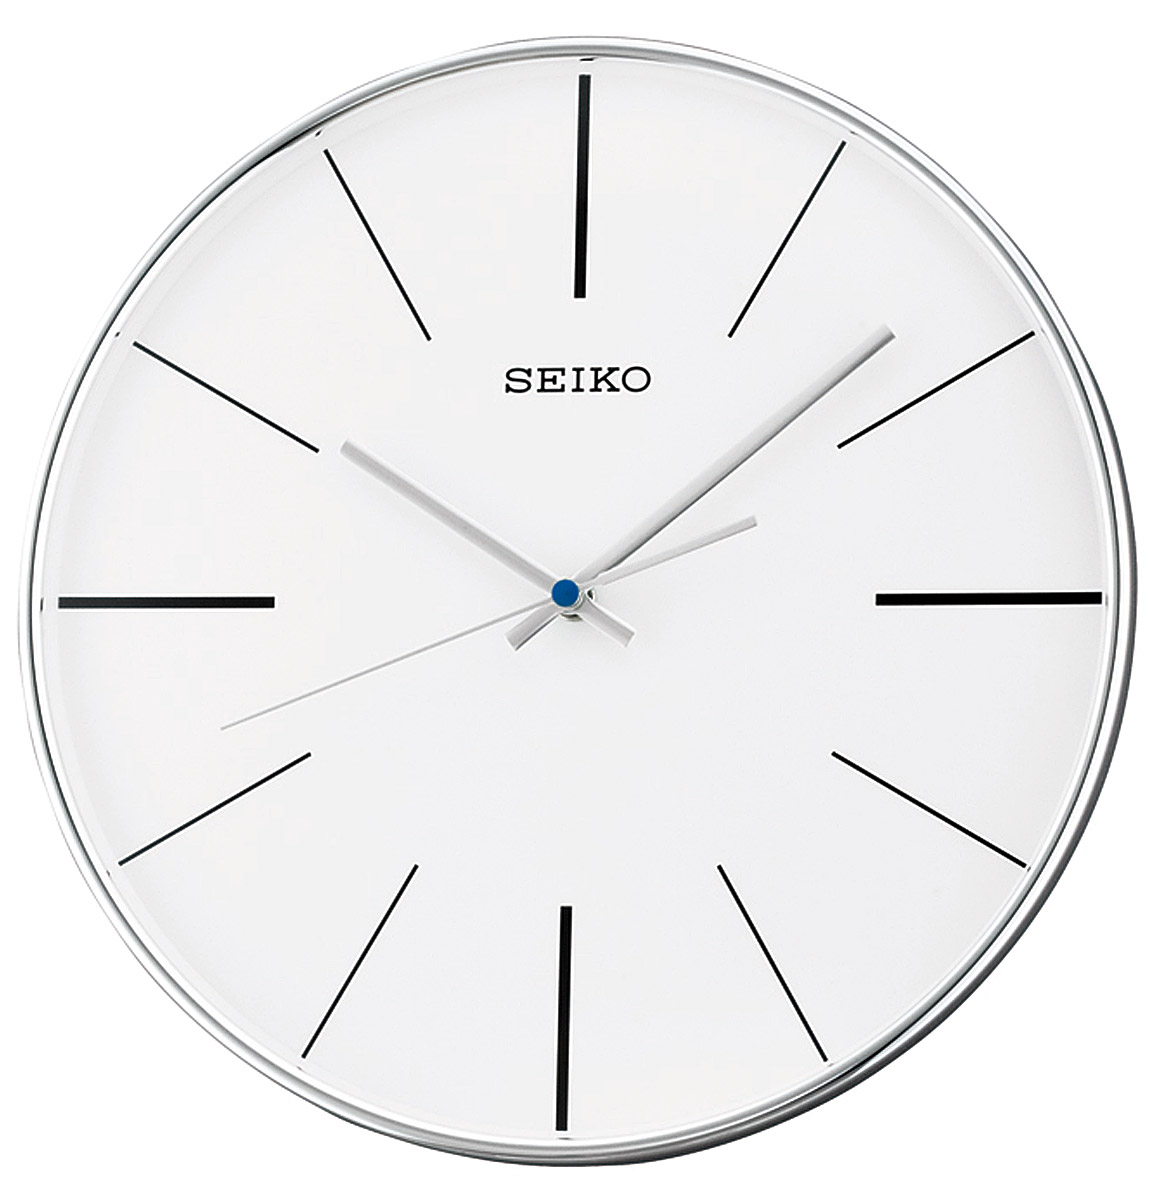 Часы циферблат настольные. Настенные часы Seiko qxa634a. Часы настенные кварцевые Seiko qxa653k. Настенные часы Seiko qxa020s. Настенные часы Seiko qxa342s.